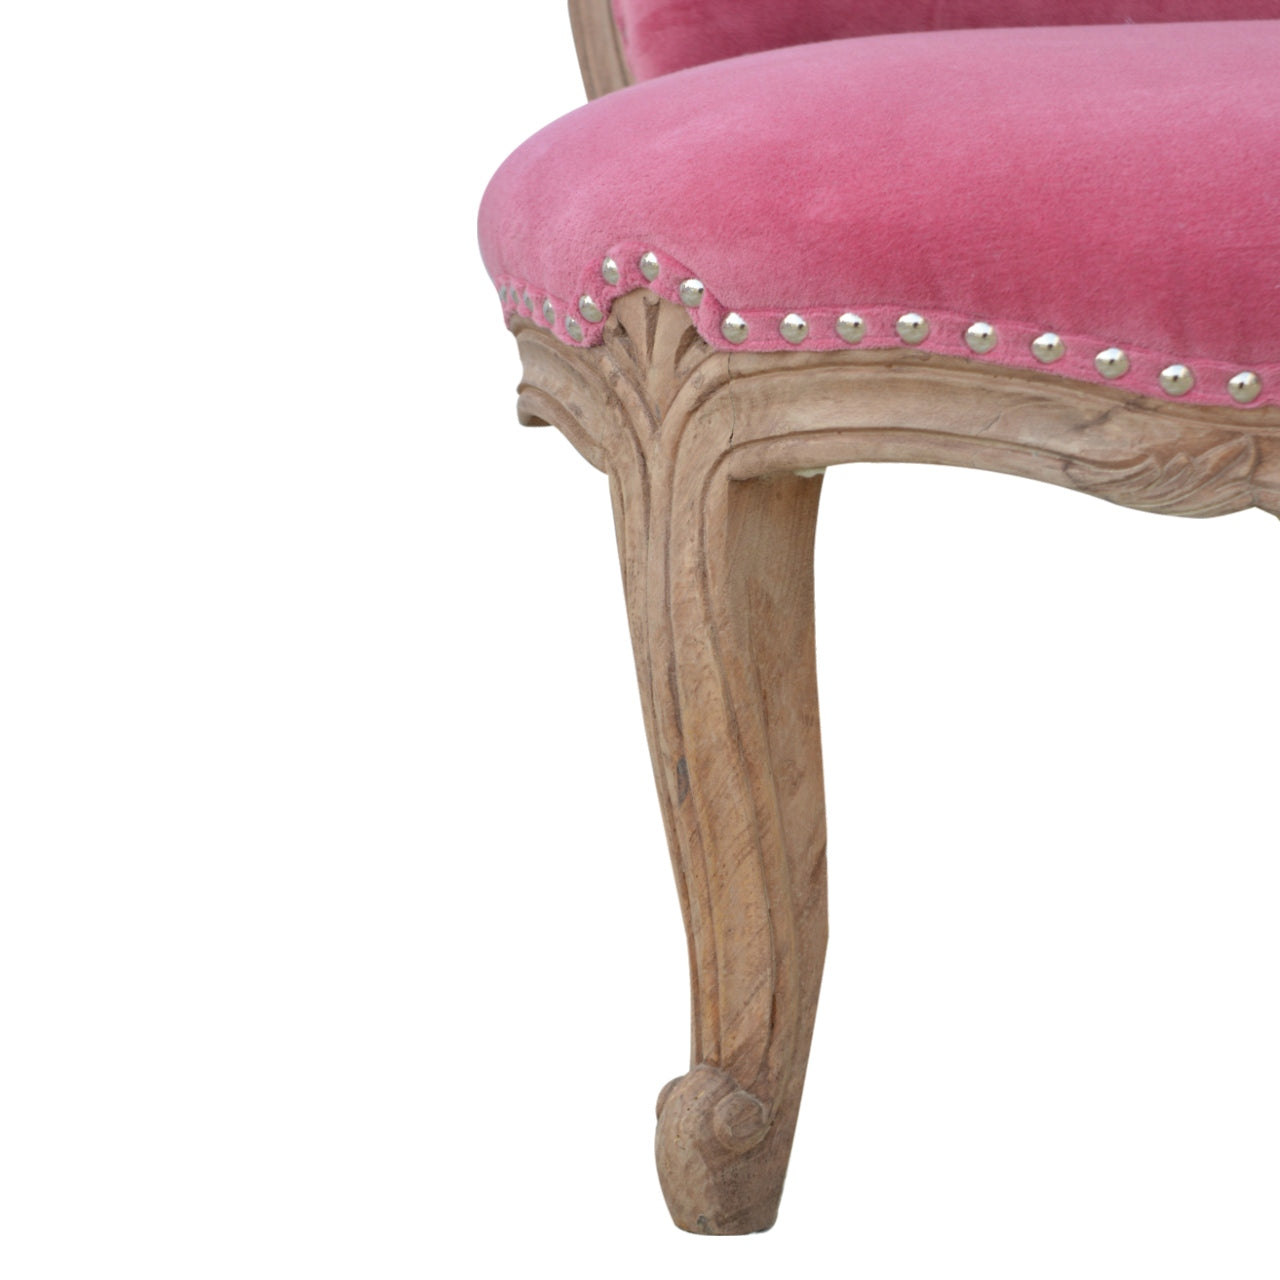 Pink Velvet Occasional Studded Chair